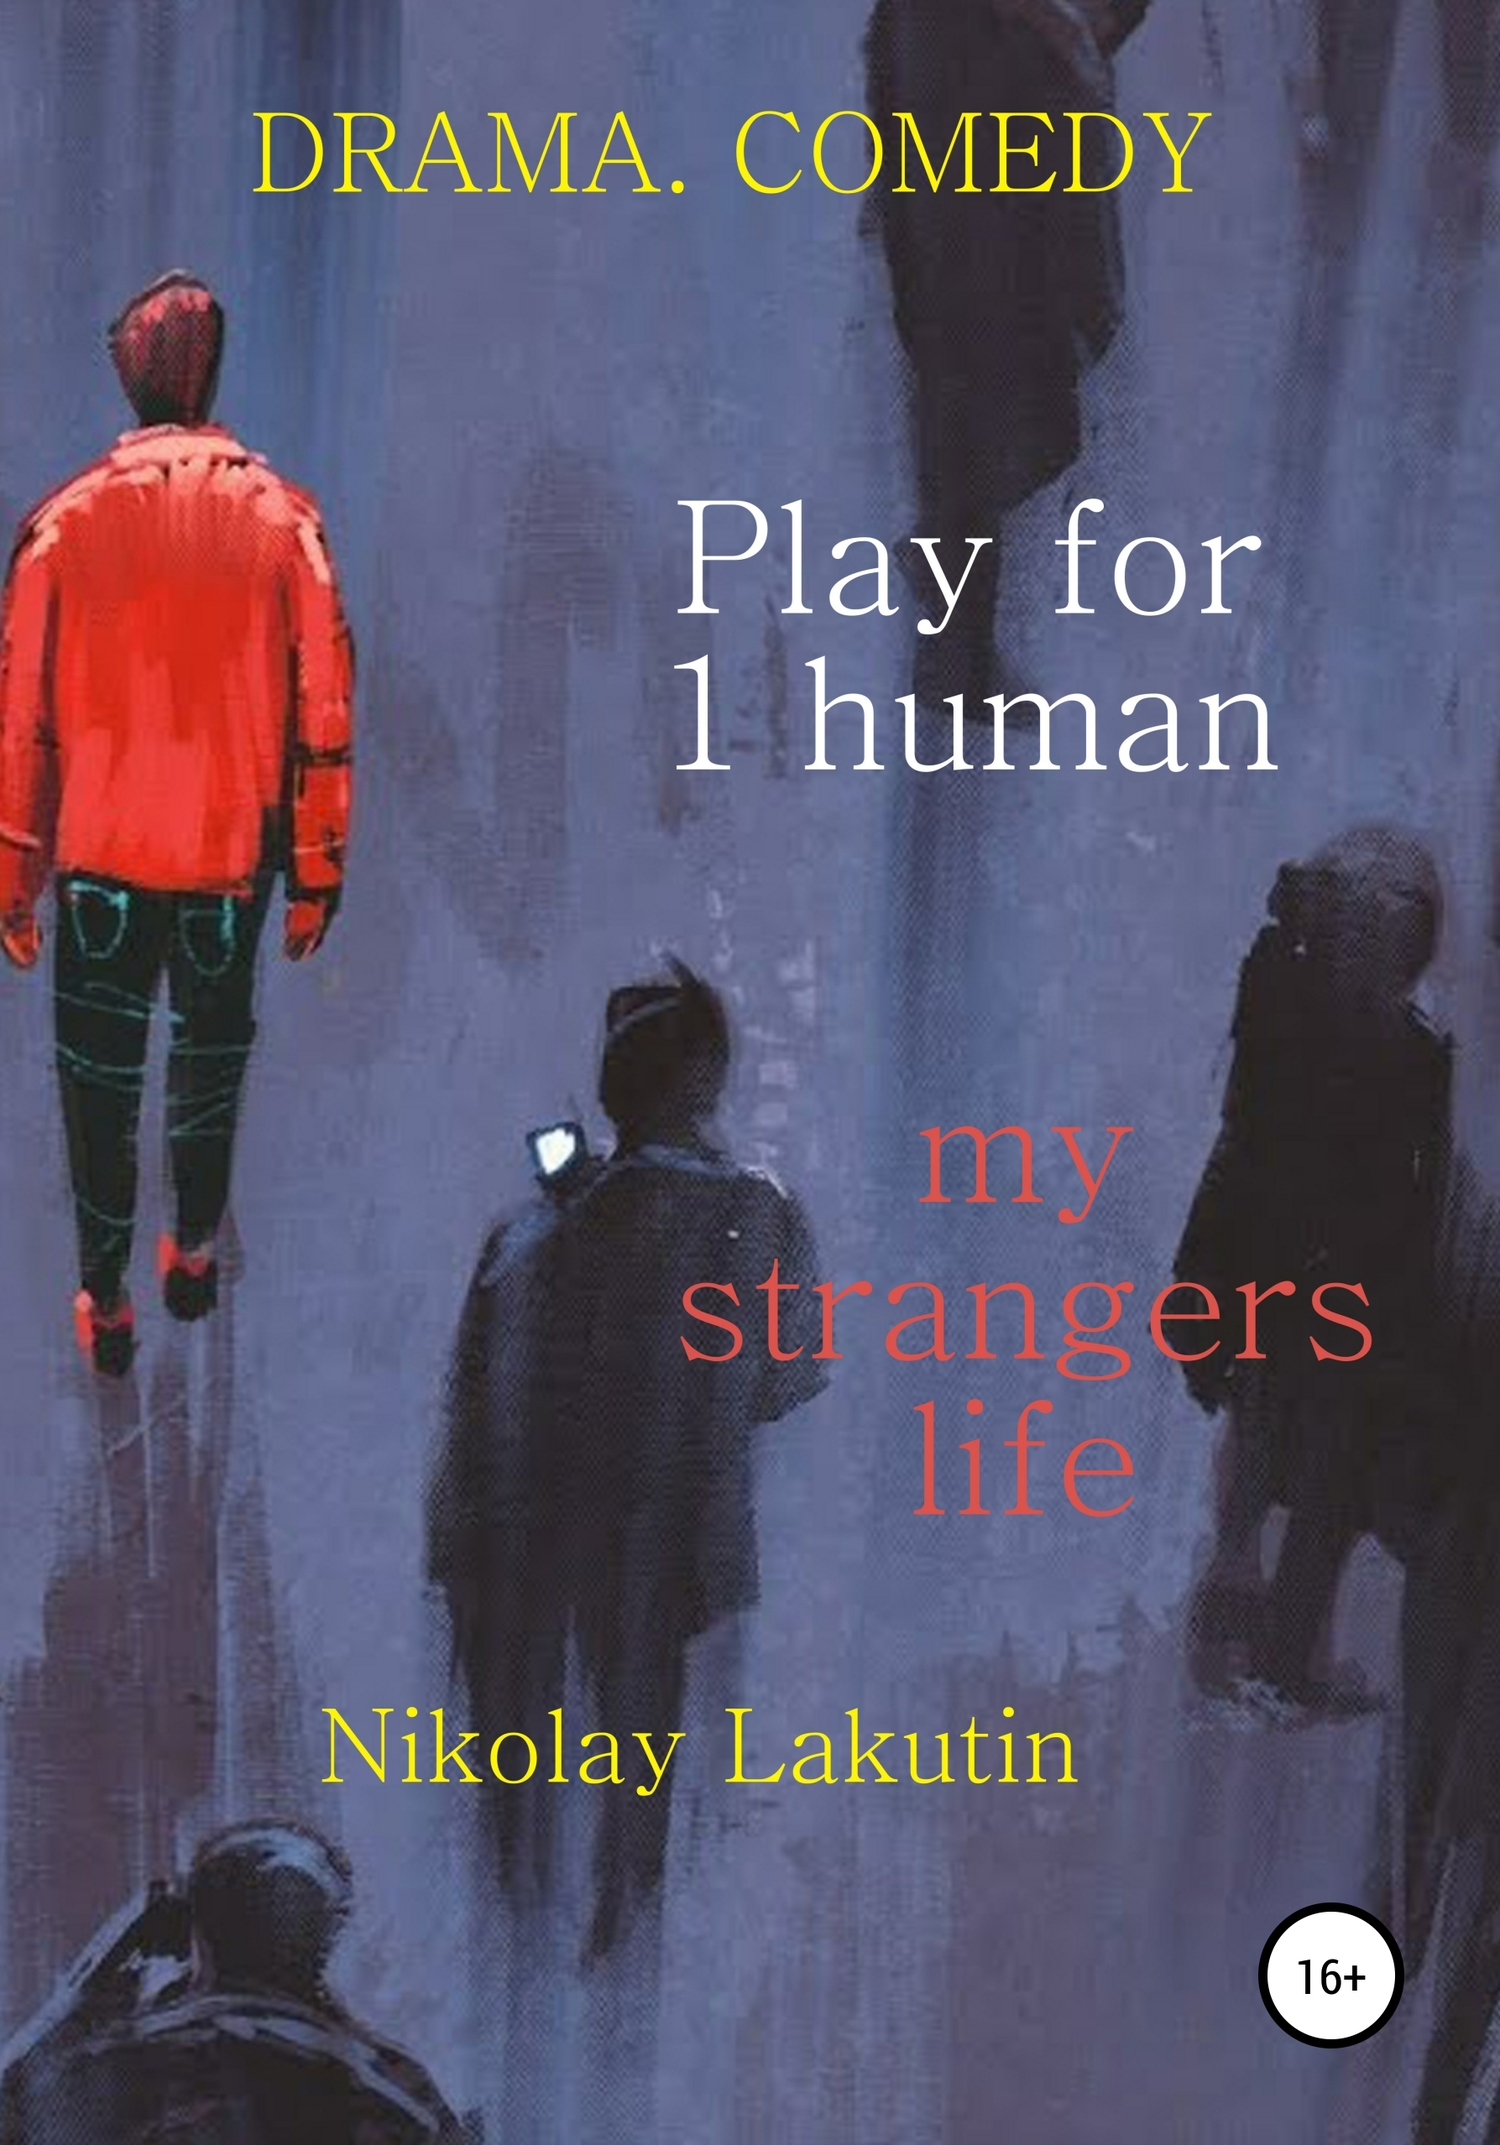 Play for 1 human. My strangers life. DRAMA. COMEDY - Nikolay Lakutin